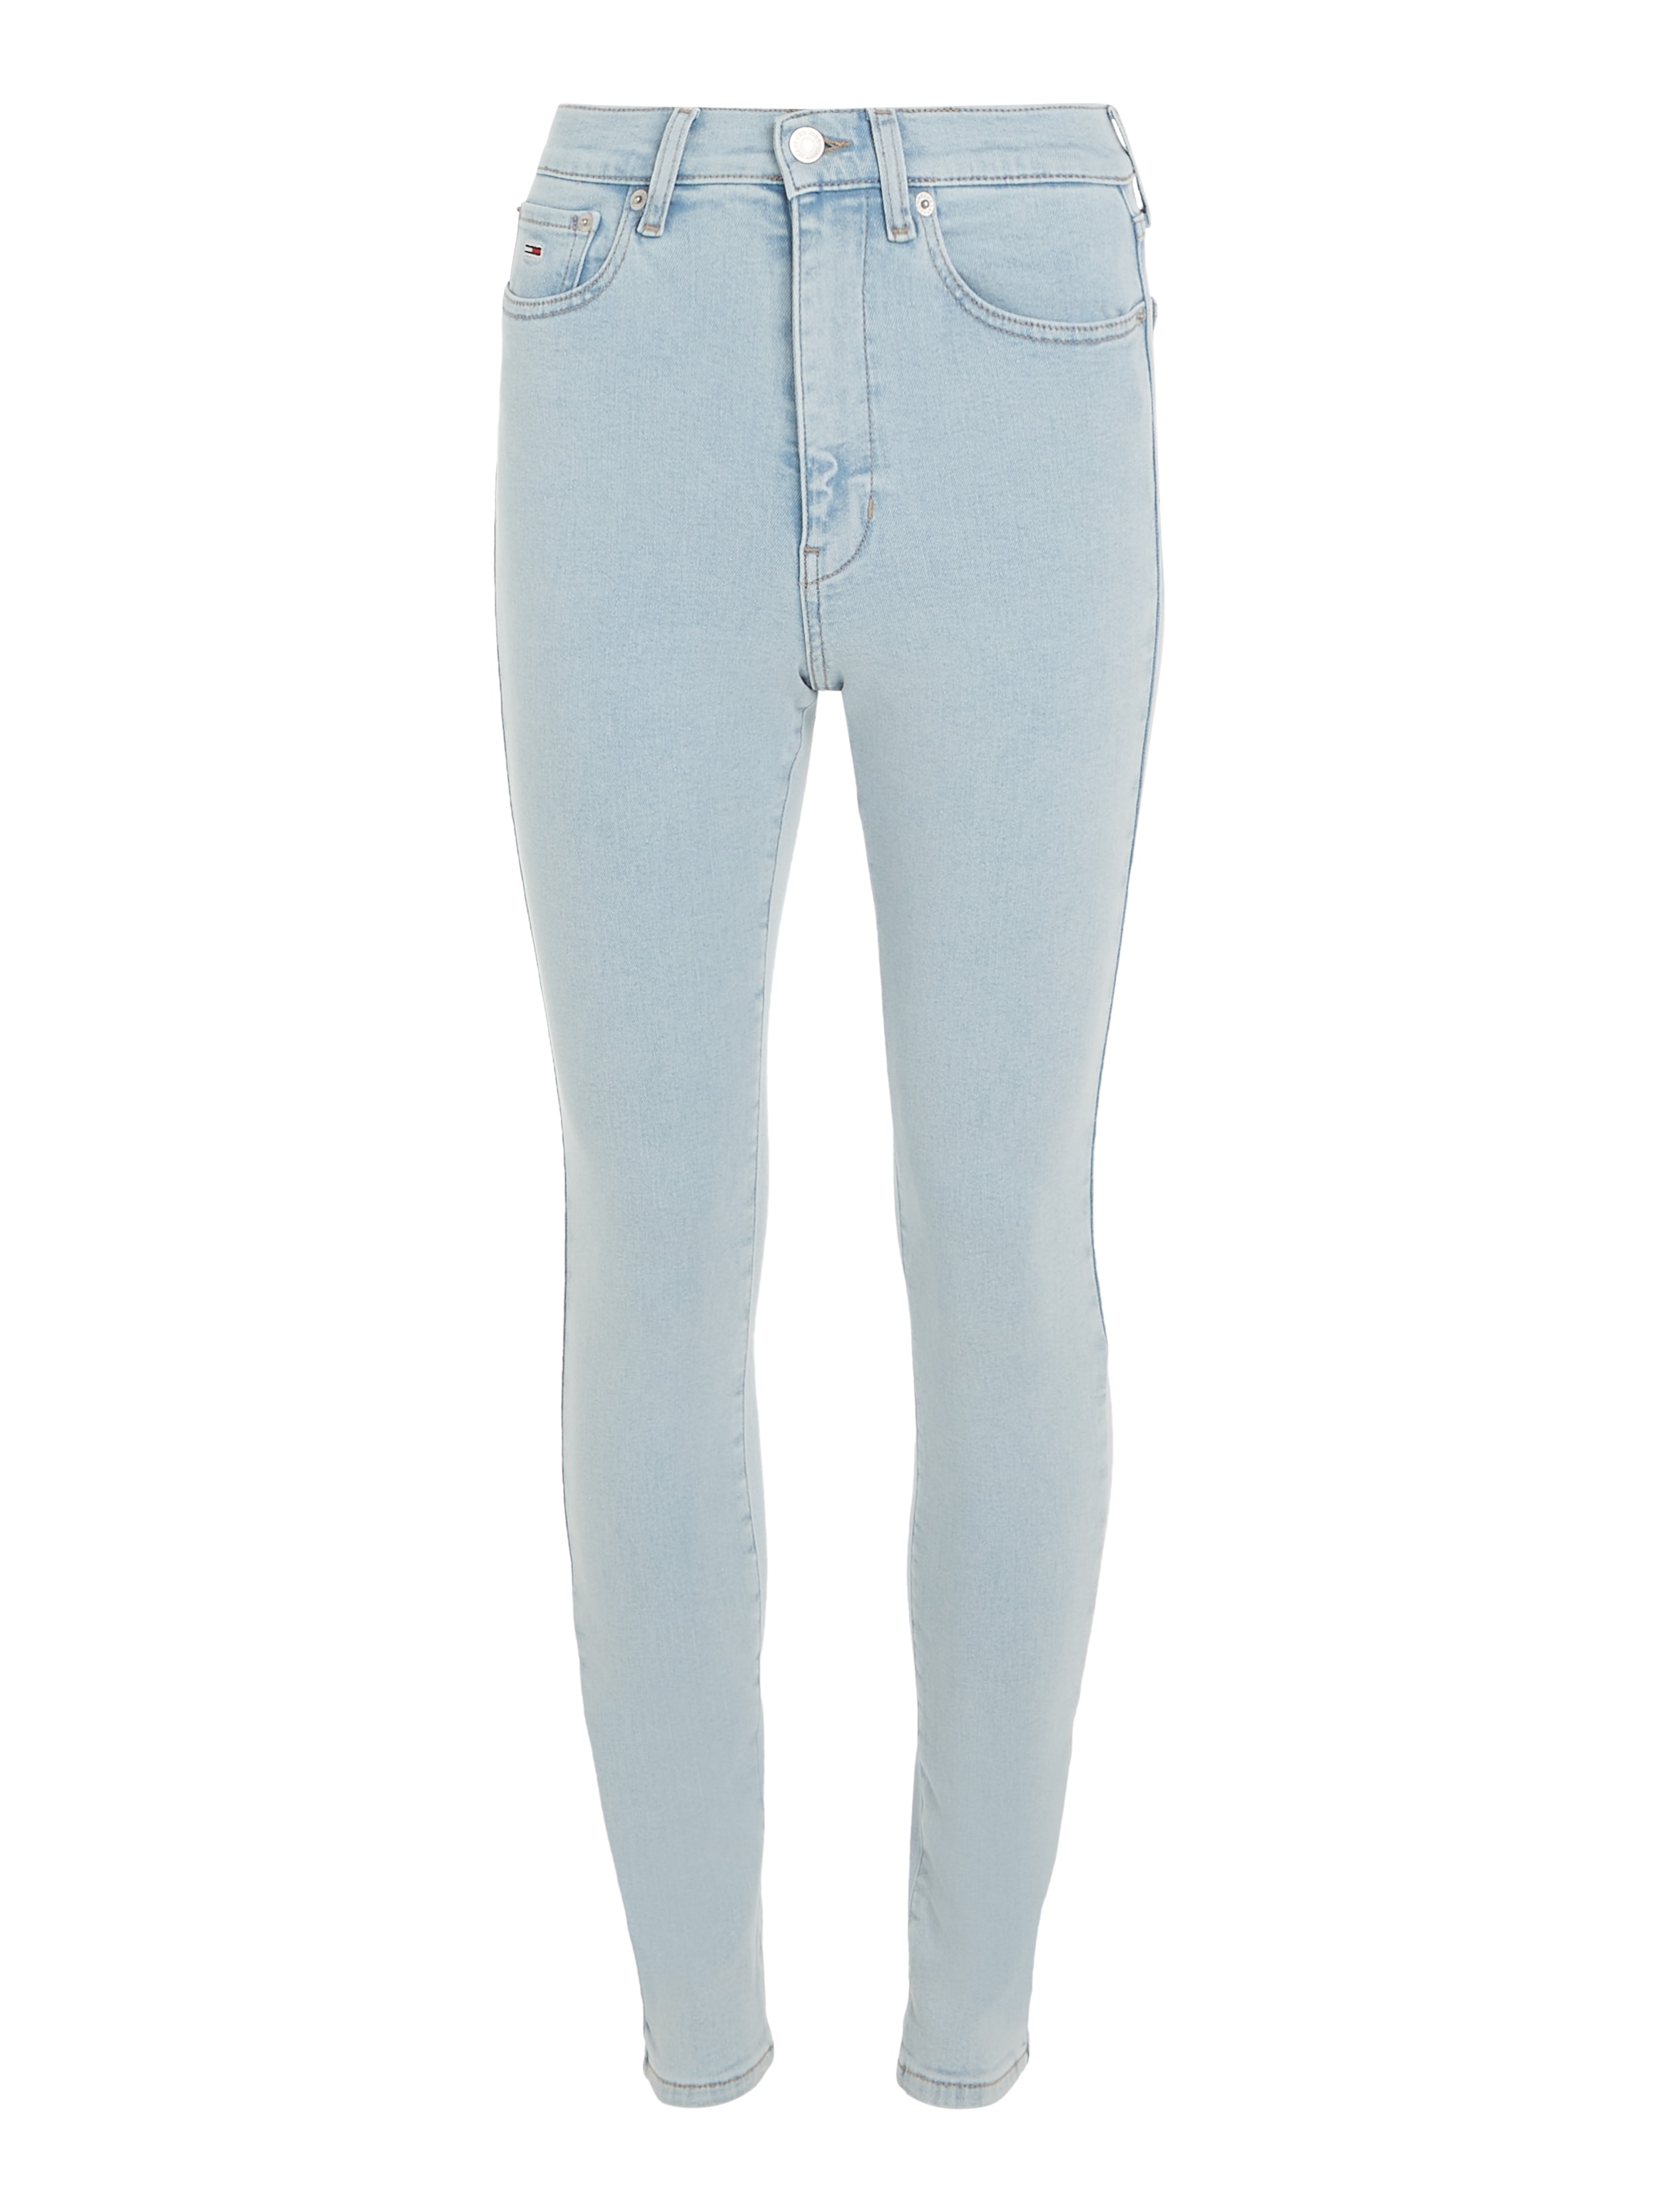 Jeans Jeans »Sylvia«, Tommy kaufen Ledermarkenlabel Bequeme online mit